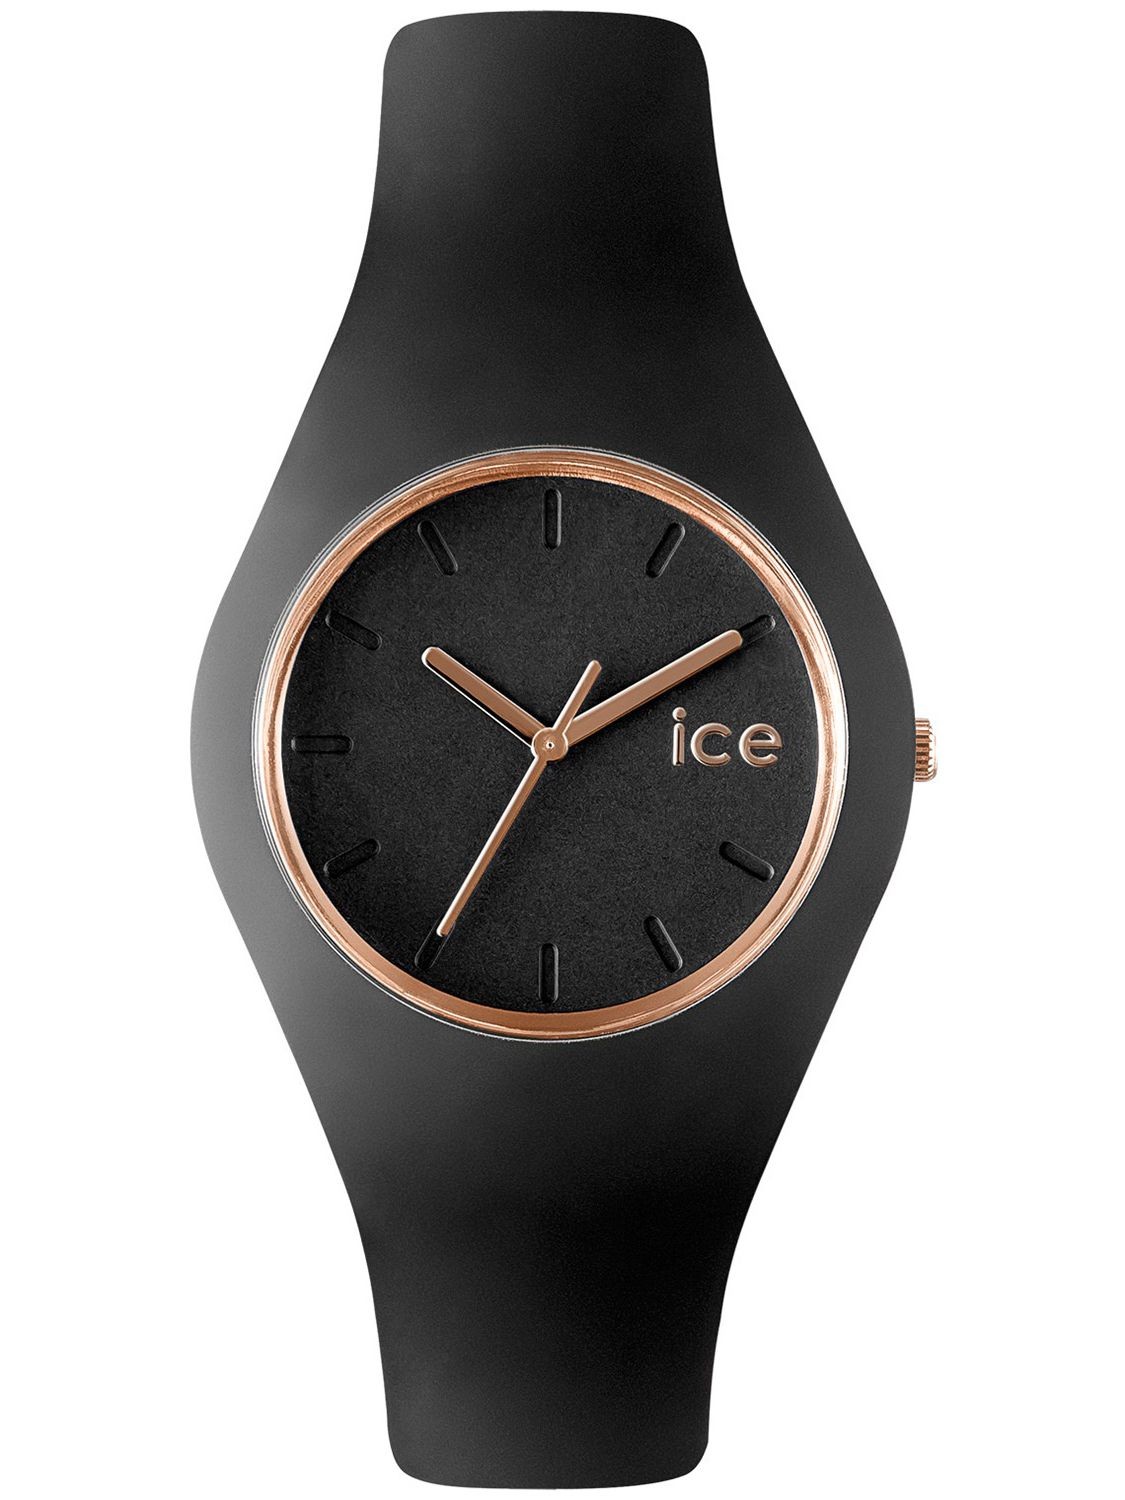 Ice watch часы. Часы айс вотч. Часы Ice Quartz. Ice watch - glitter - Black '001355. Ice часы женские.